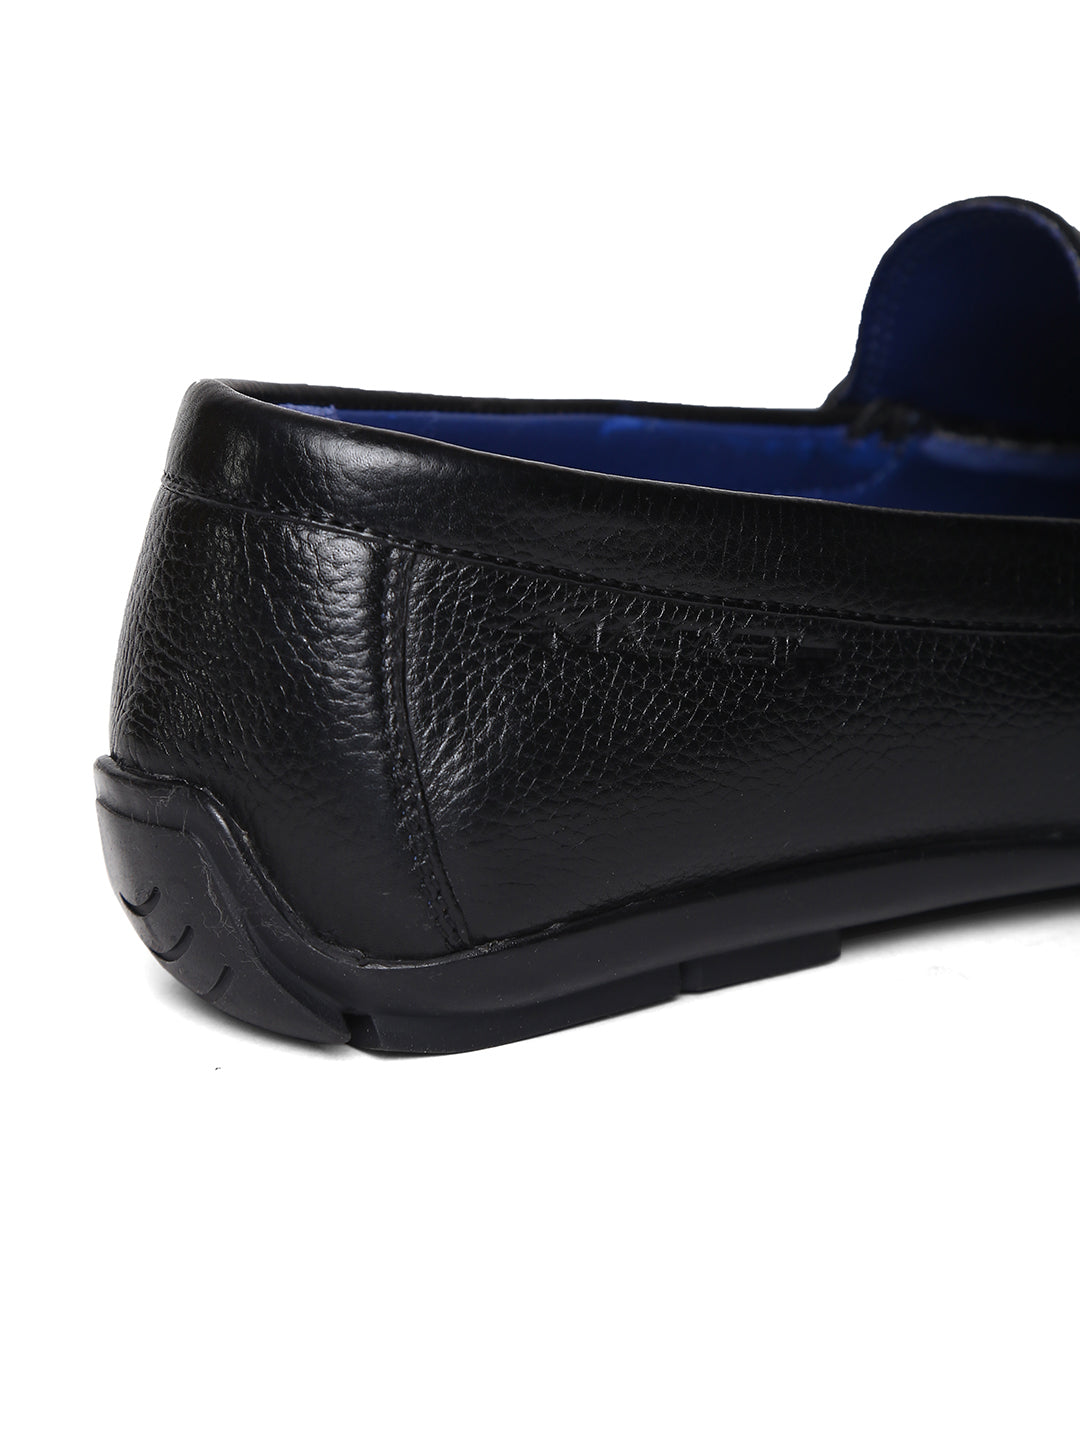 Masabih Genuine Milled Leather Black Mocassin Shoes with Saddle Ornument for Men